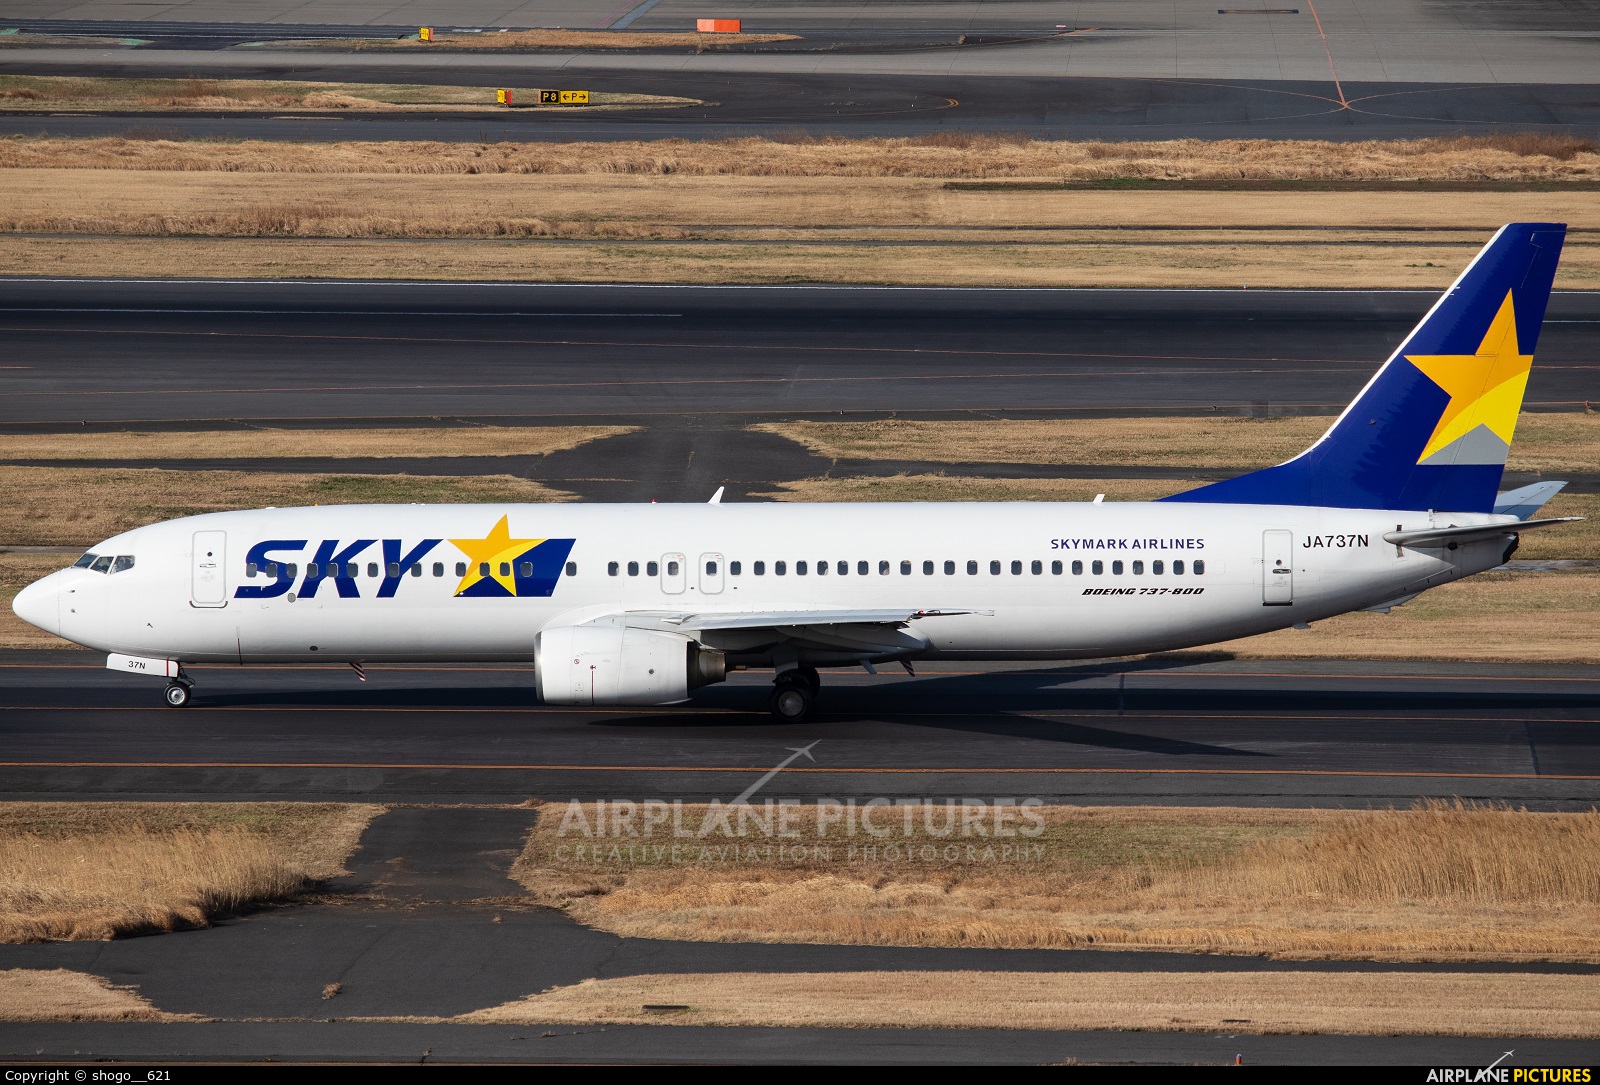 Skymark Airlines JA737N aircraft at Tokyo - Haneda Intl